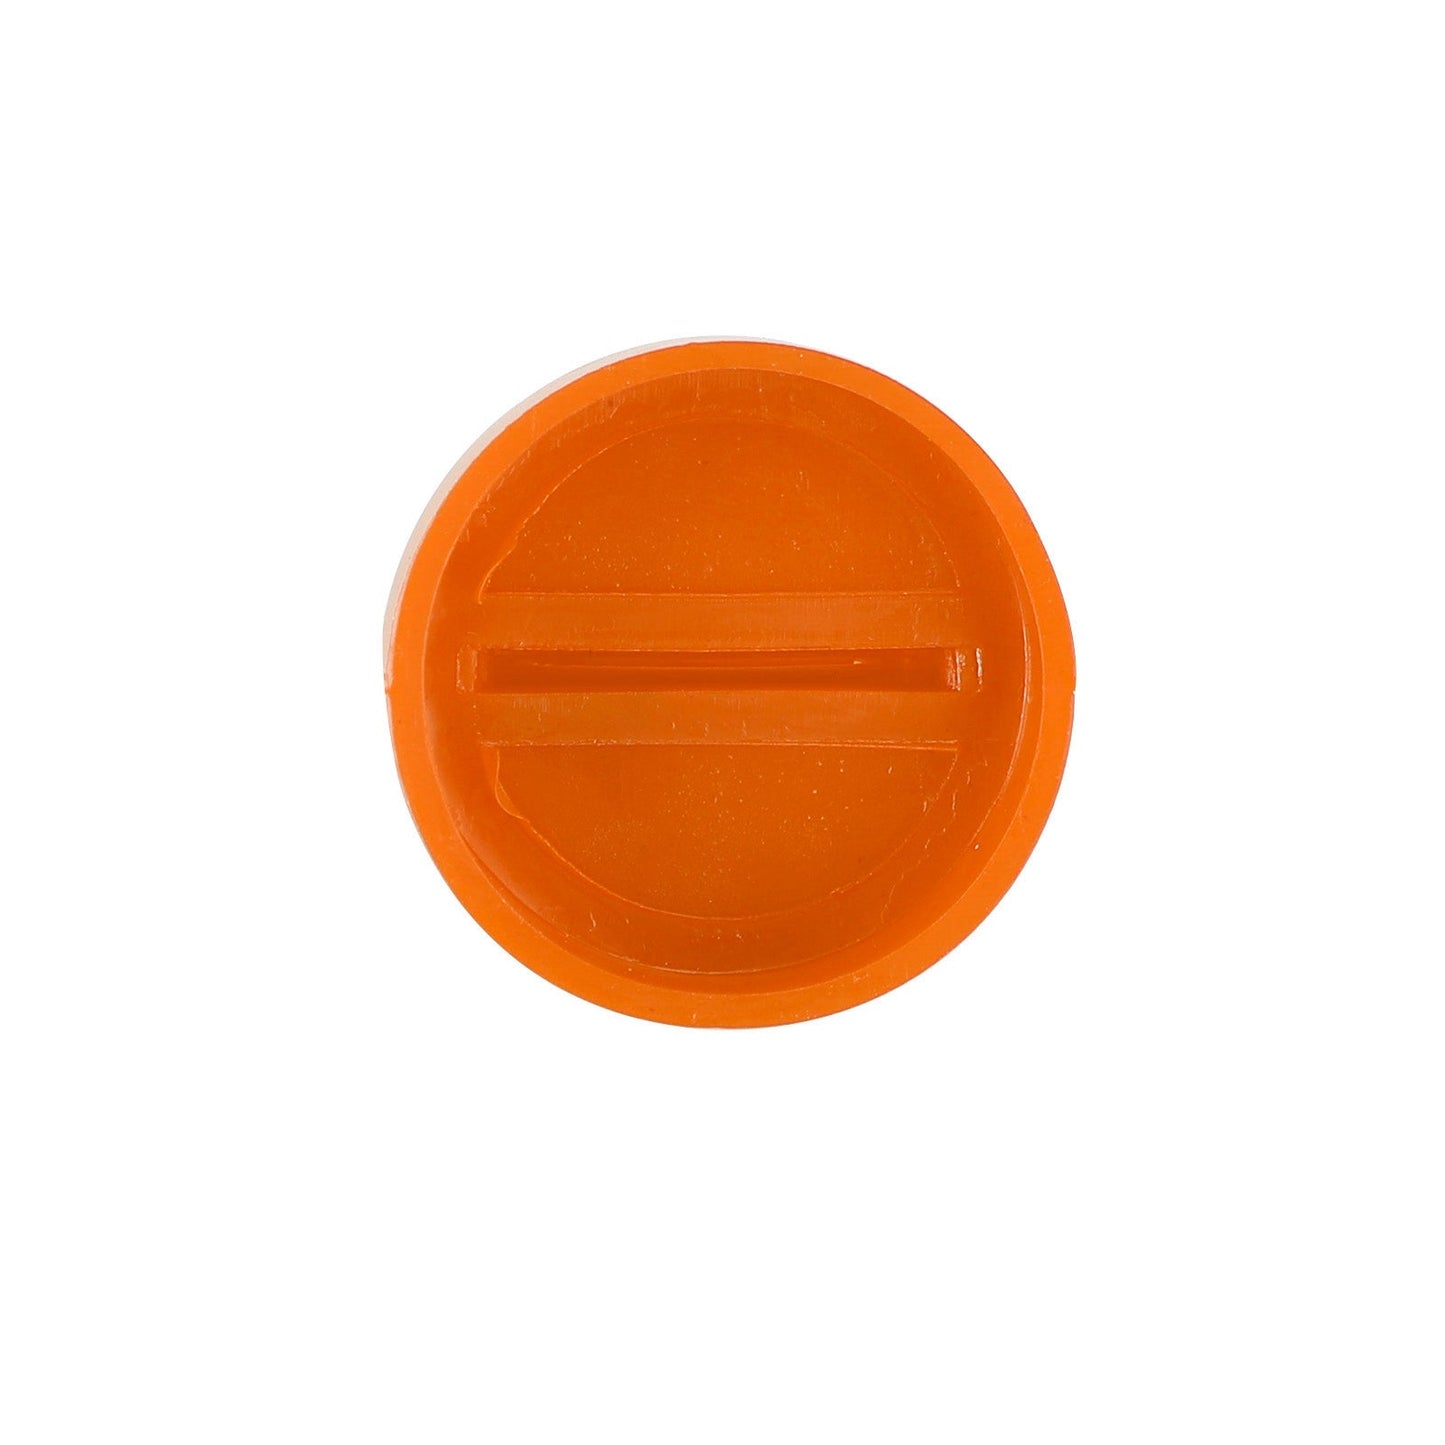 Orange Ignition Key Cover w/Nut For Polaris RZR XP 1000 900 800 Ranger Sportsman